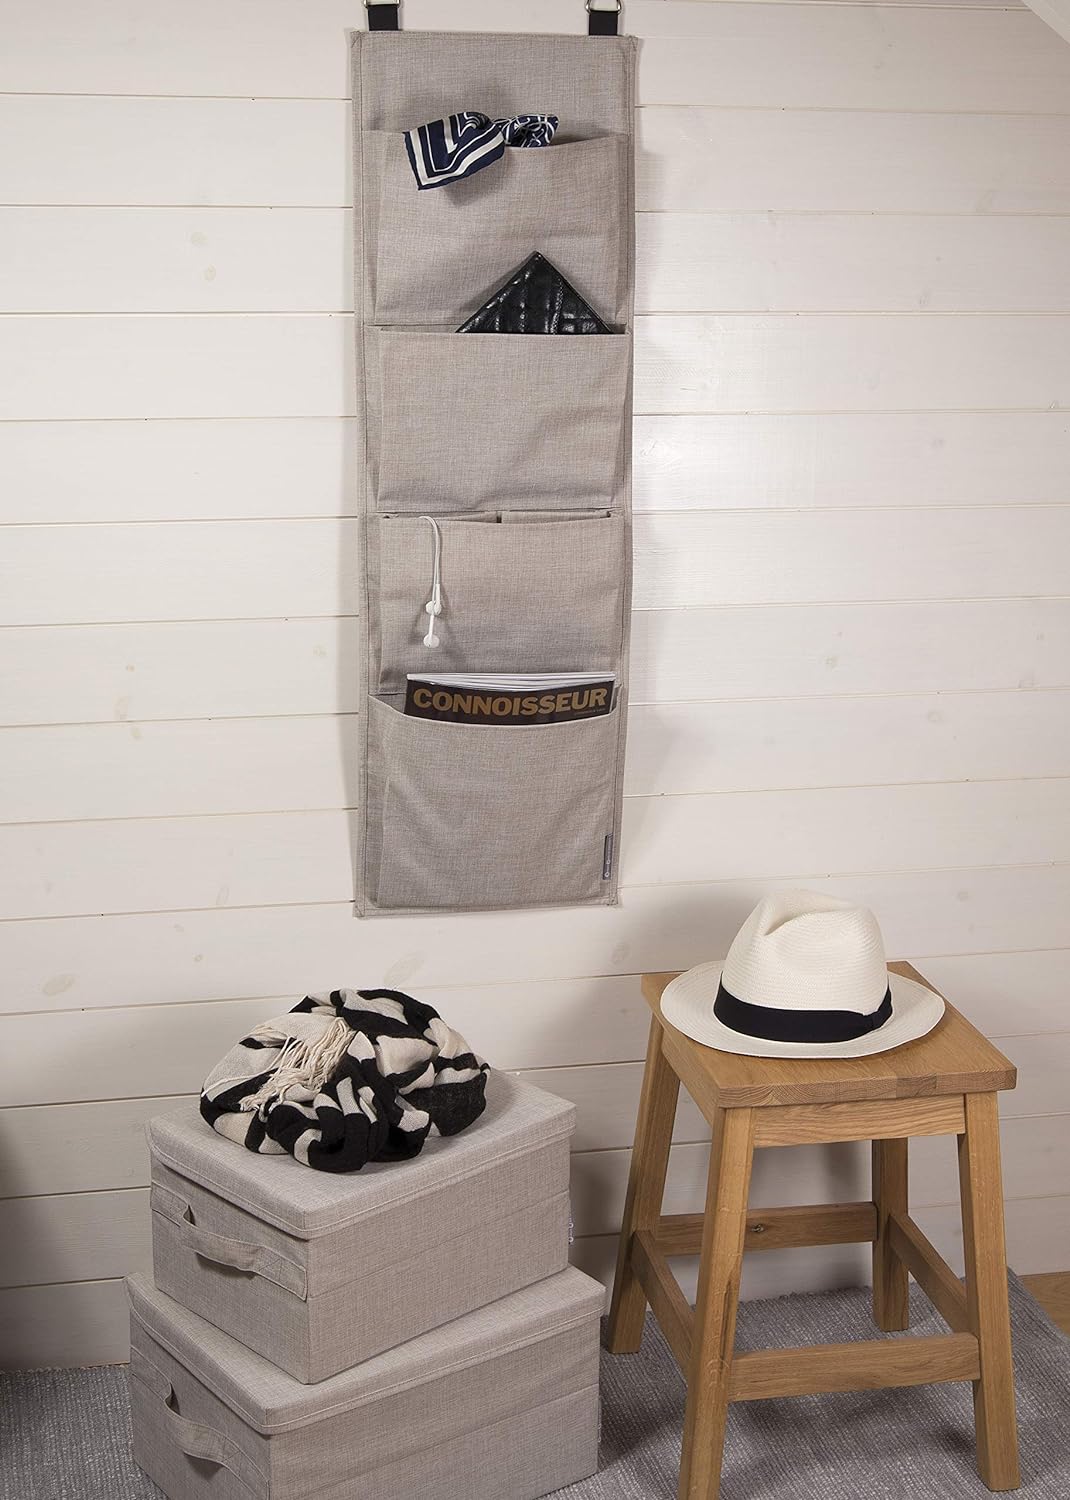 Bigso Soft Hanging Wall Storage Organizer | Back of Door Storage